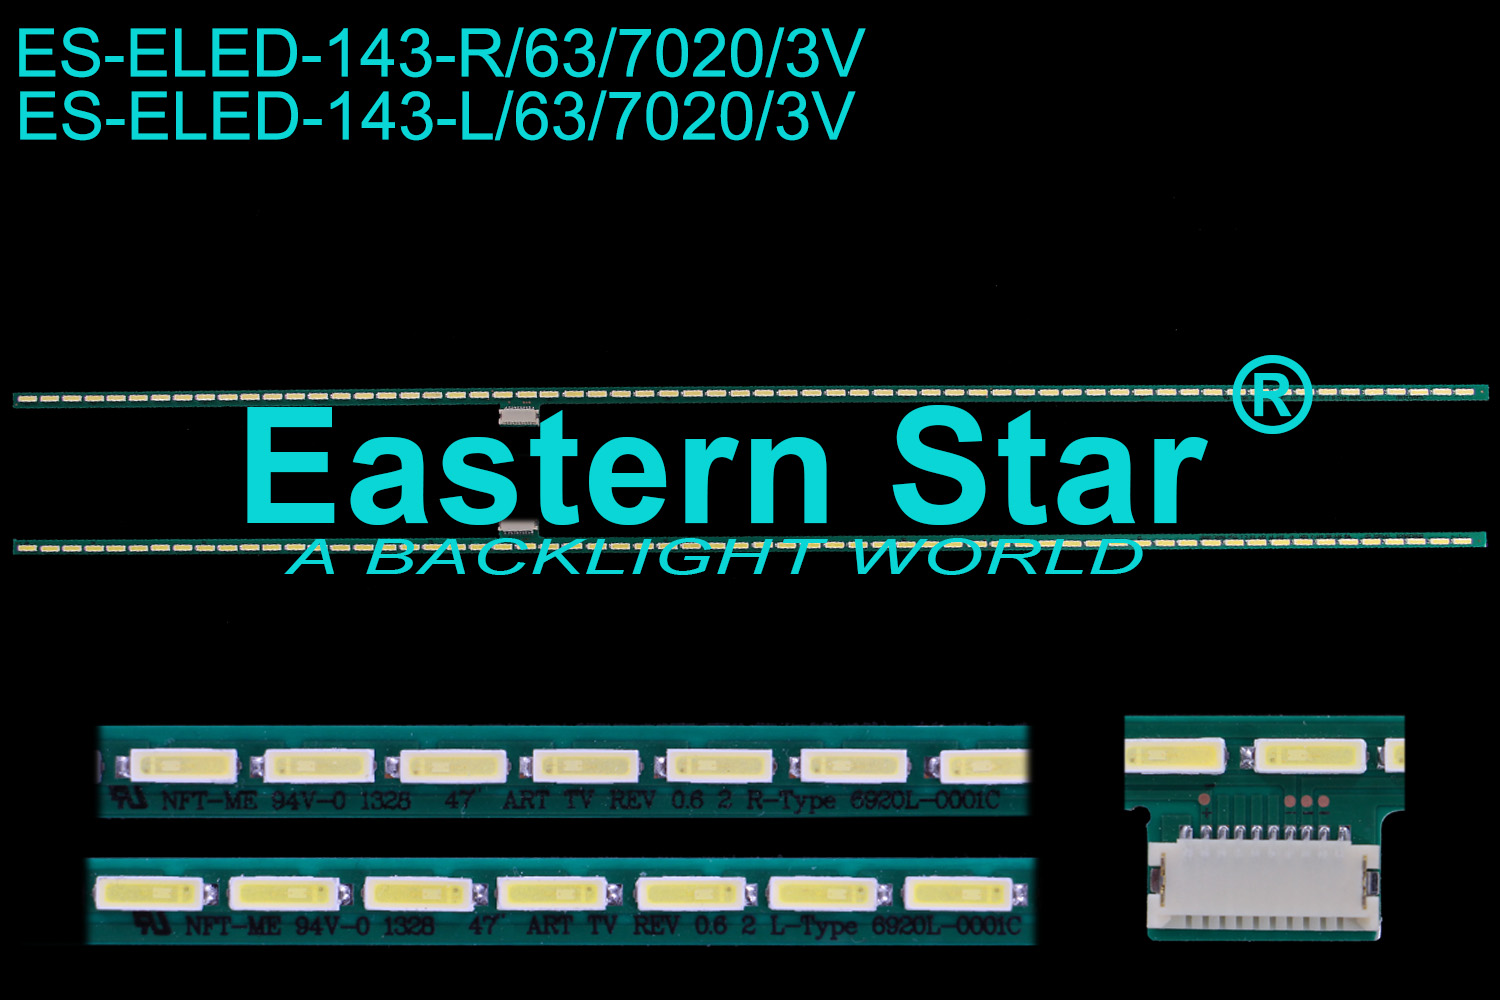 ES-ELED-143 ELED/EDGE TV backlight use for Lg 47''R:47" ART TV REV0.6 2 R-Type 6920l-0001C 6916L-0890A  L:47" ART TV REV0.6 2 L-Type 6920l-0001C 6916L-0890A (2)